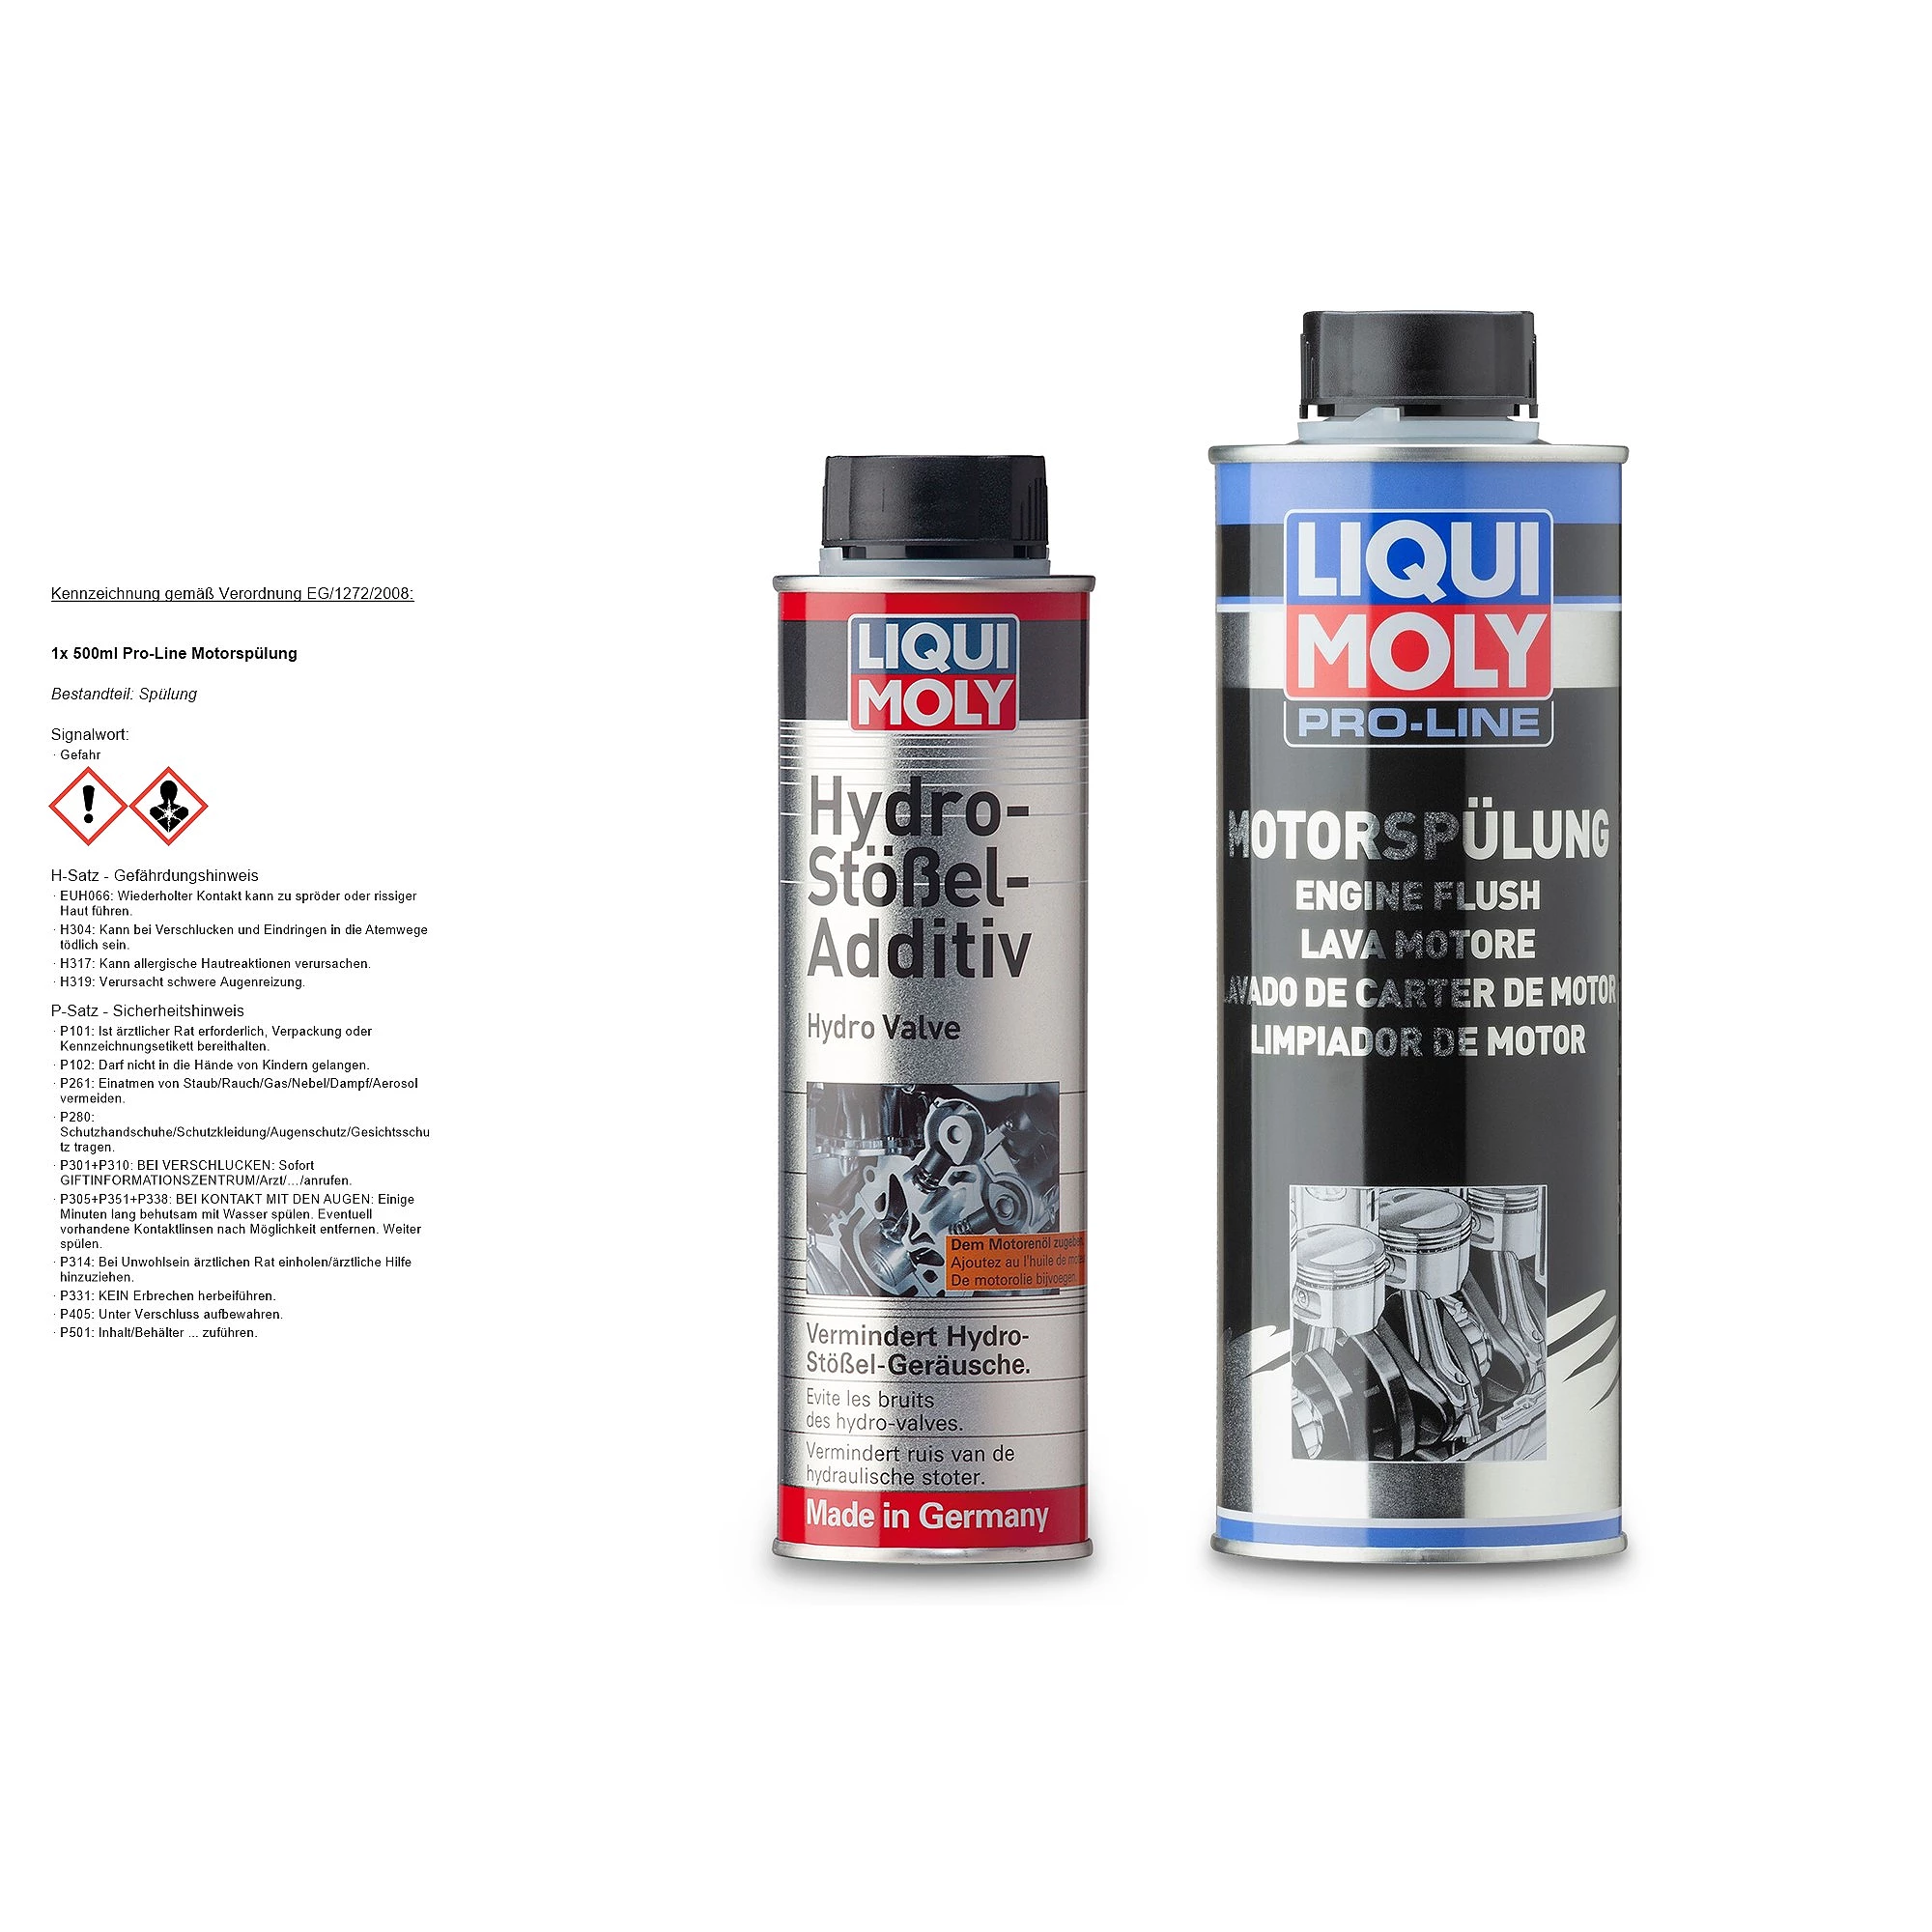 LIQUI MOLY 300 ml Hydro-Stößel-Additiv + 500 ml Pro-Line